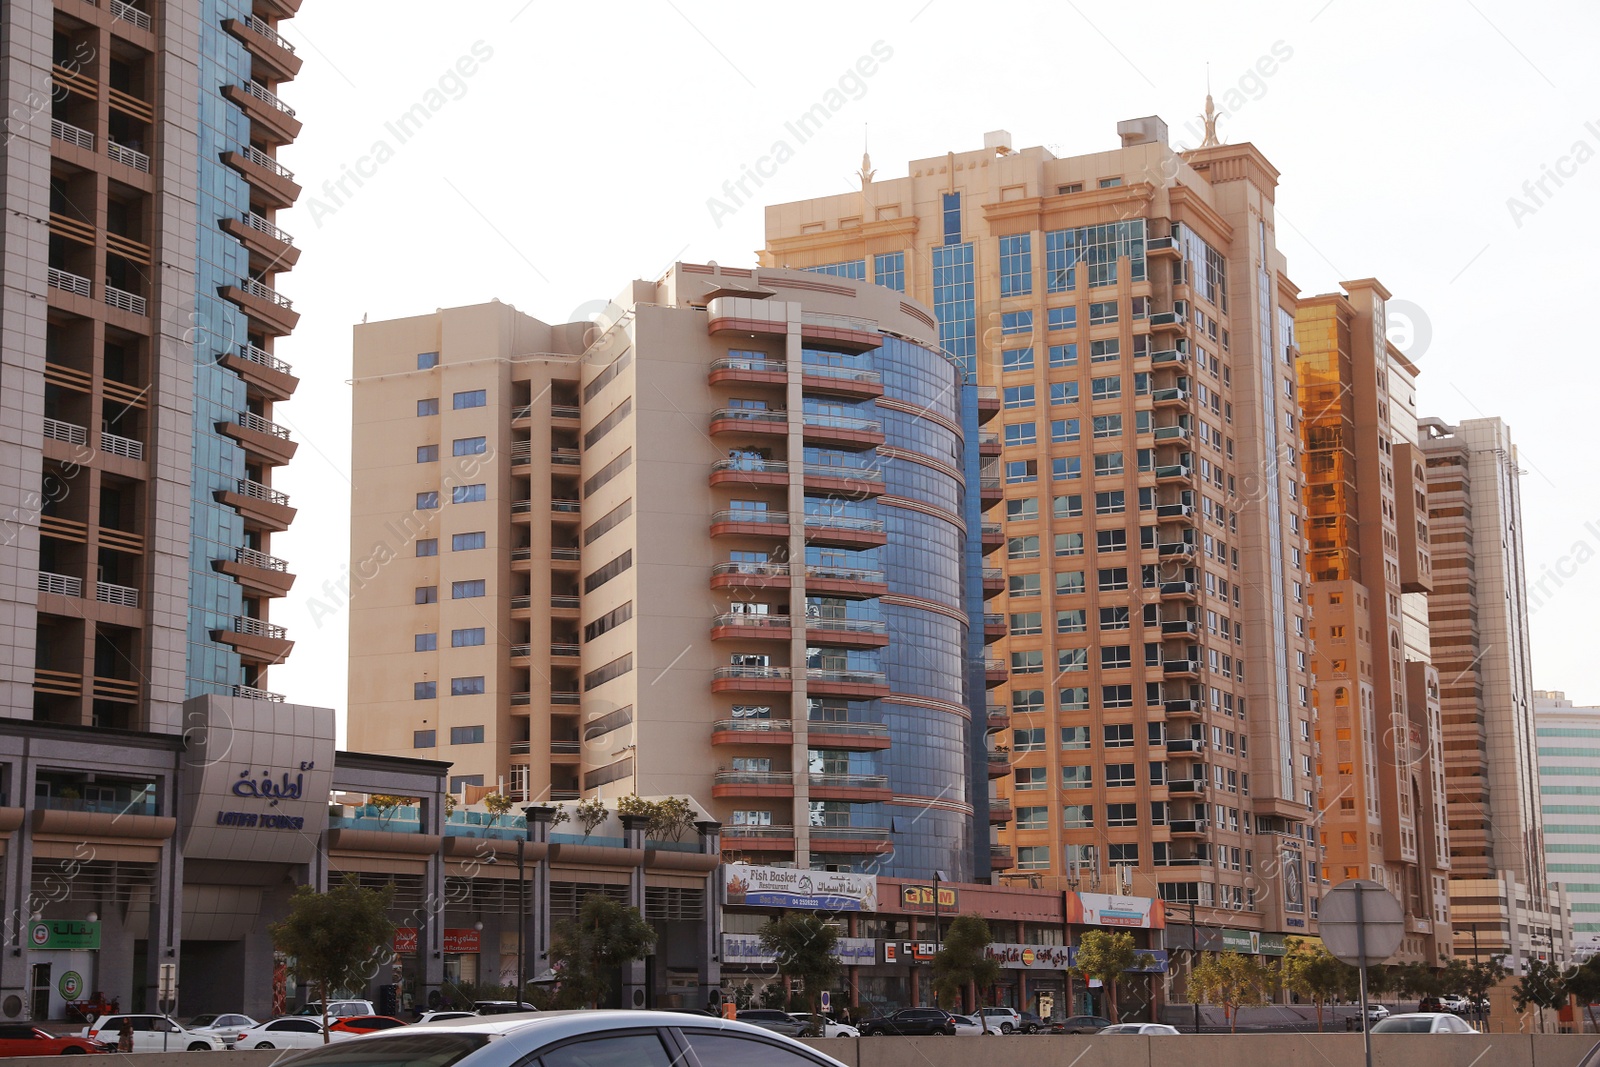 Photo of DUBAI, UNITED ARAB EMIRATES - NOVEMBER 06, 2018: Cityscape with modern buildings